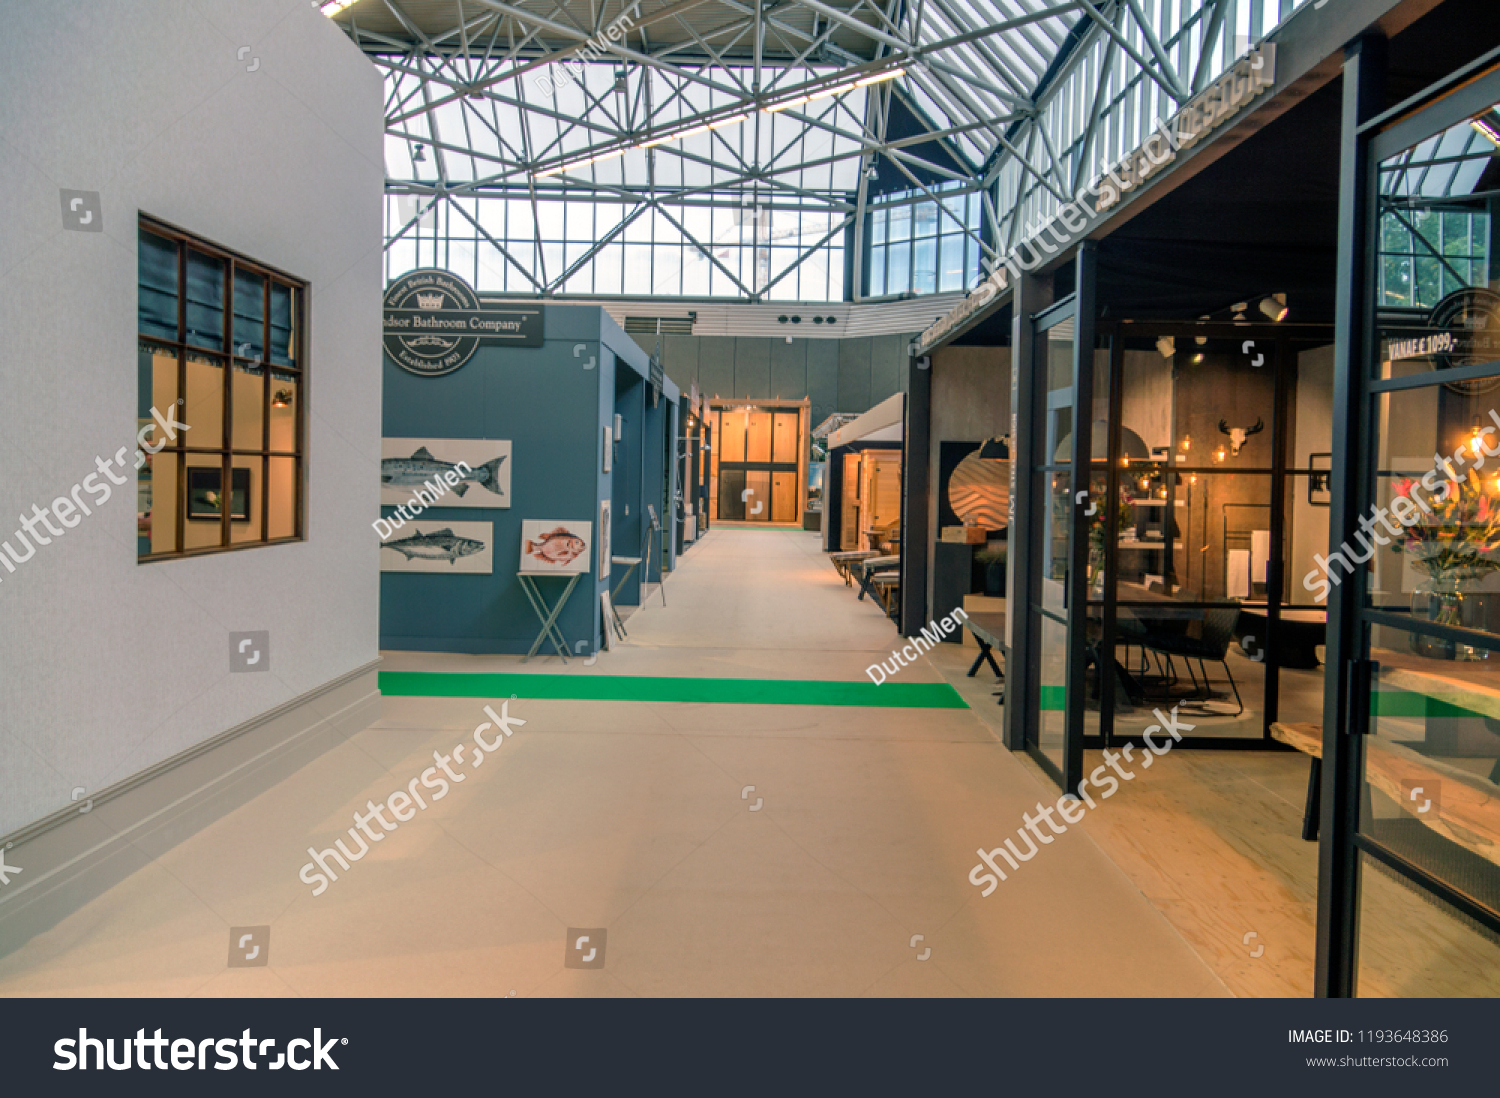 Socialisme Wereldrecord Guinness Book vastleggen Rooms Vt Wonen Design Beurs Exhibition Stock Photo (Edit Now) 1193648386